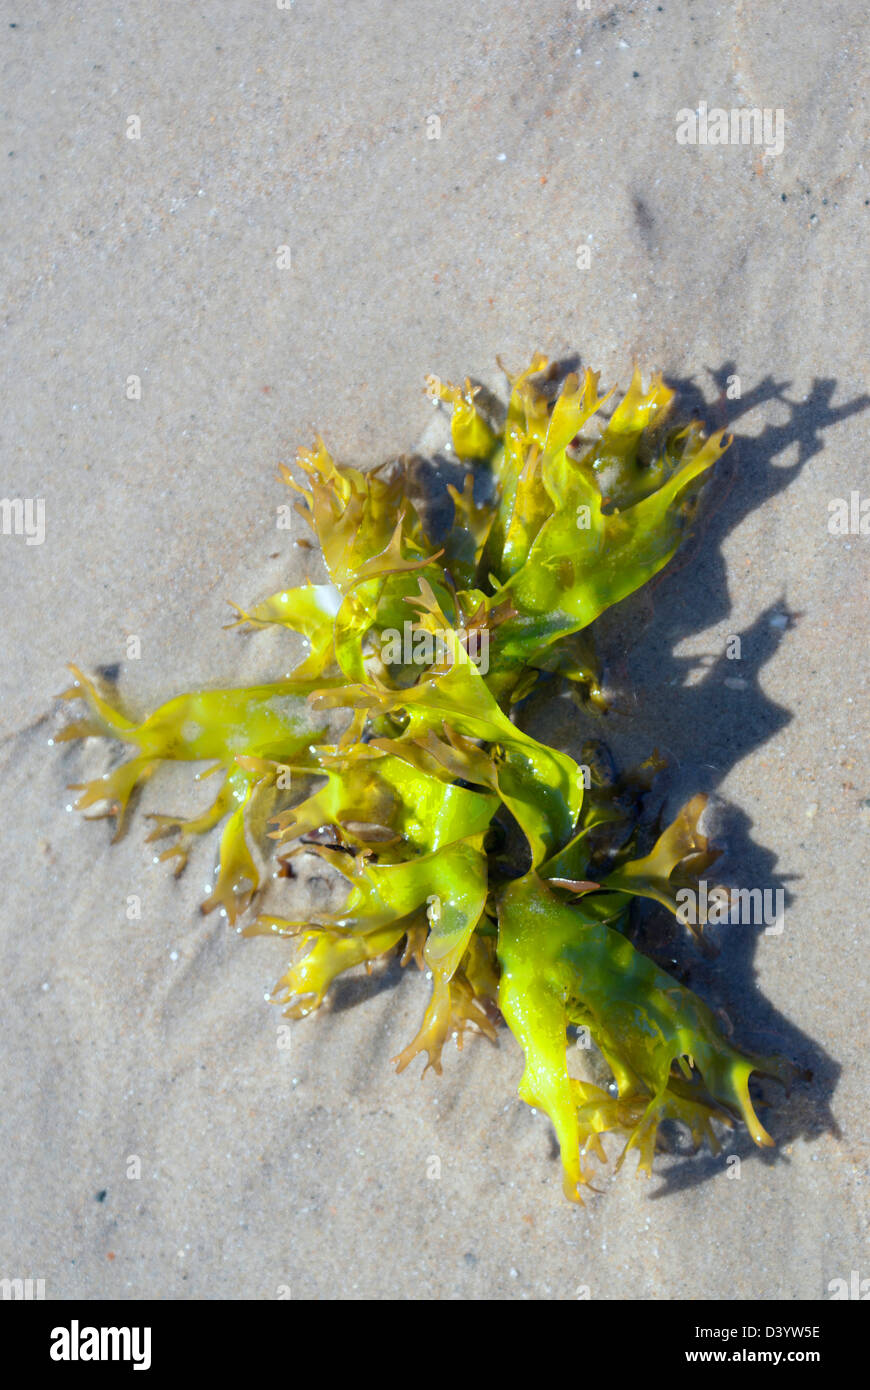 Seaweed on a sandy beach Stock Photo